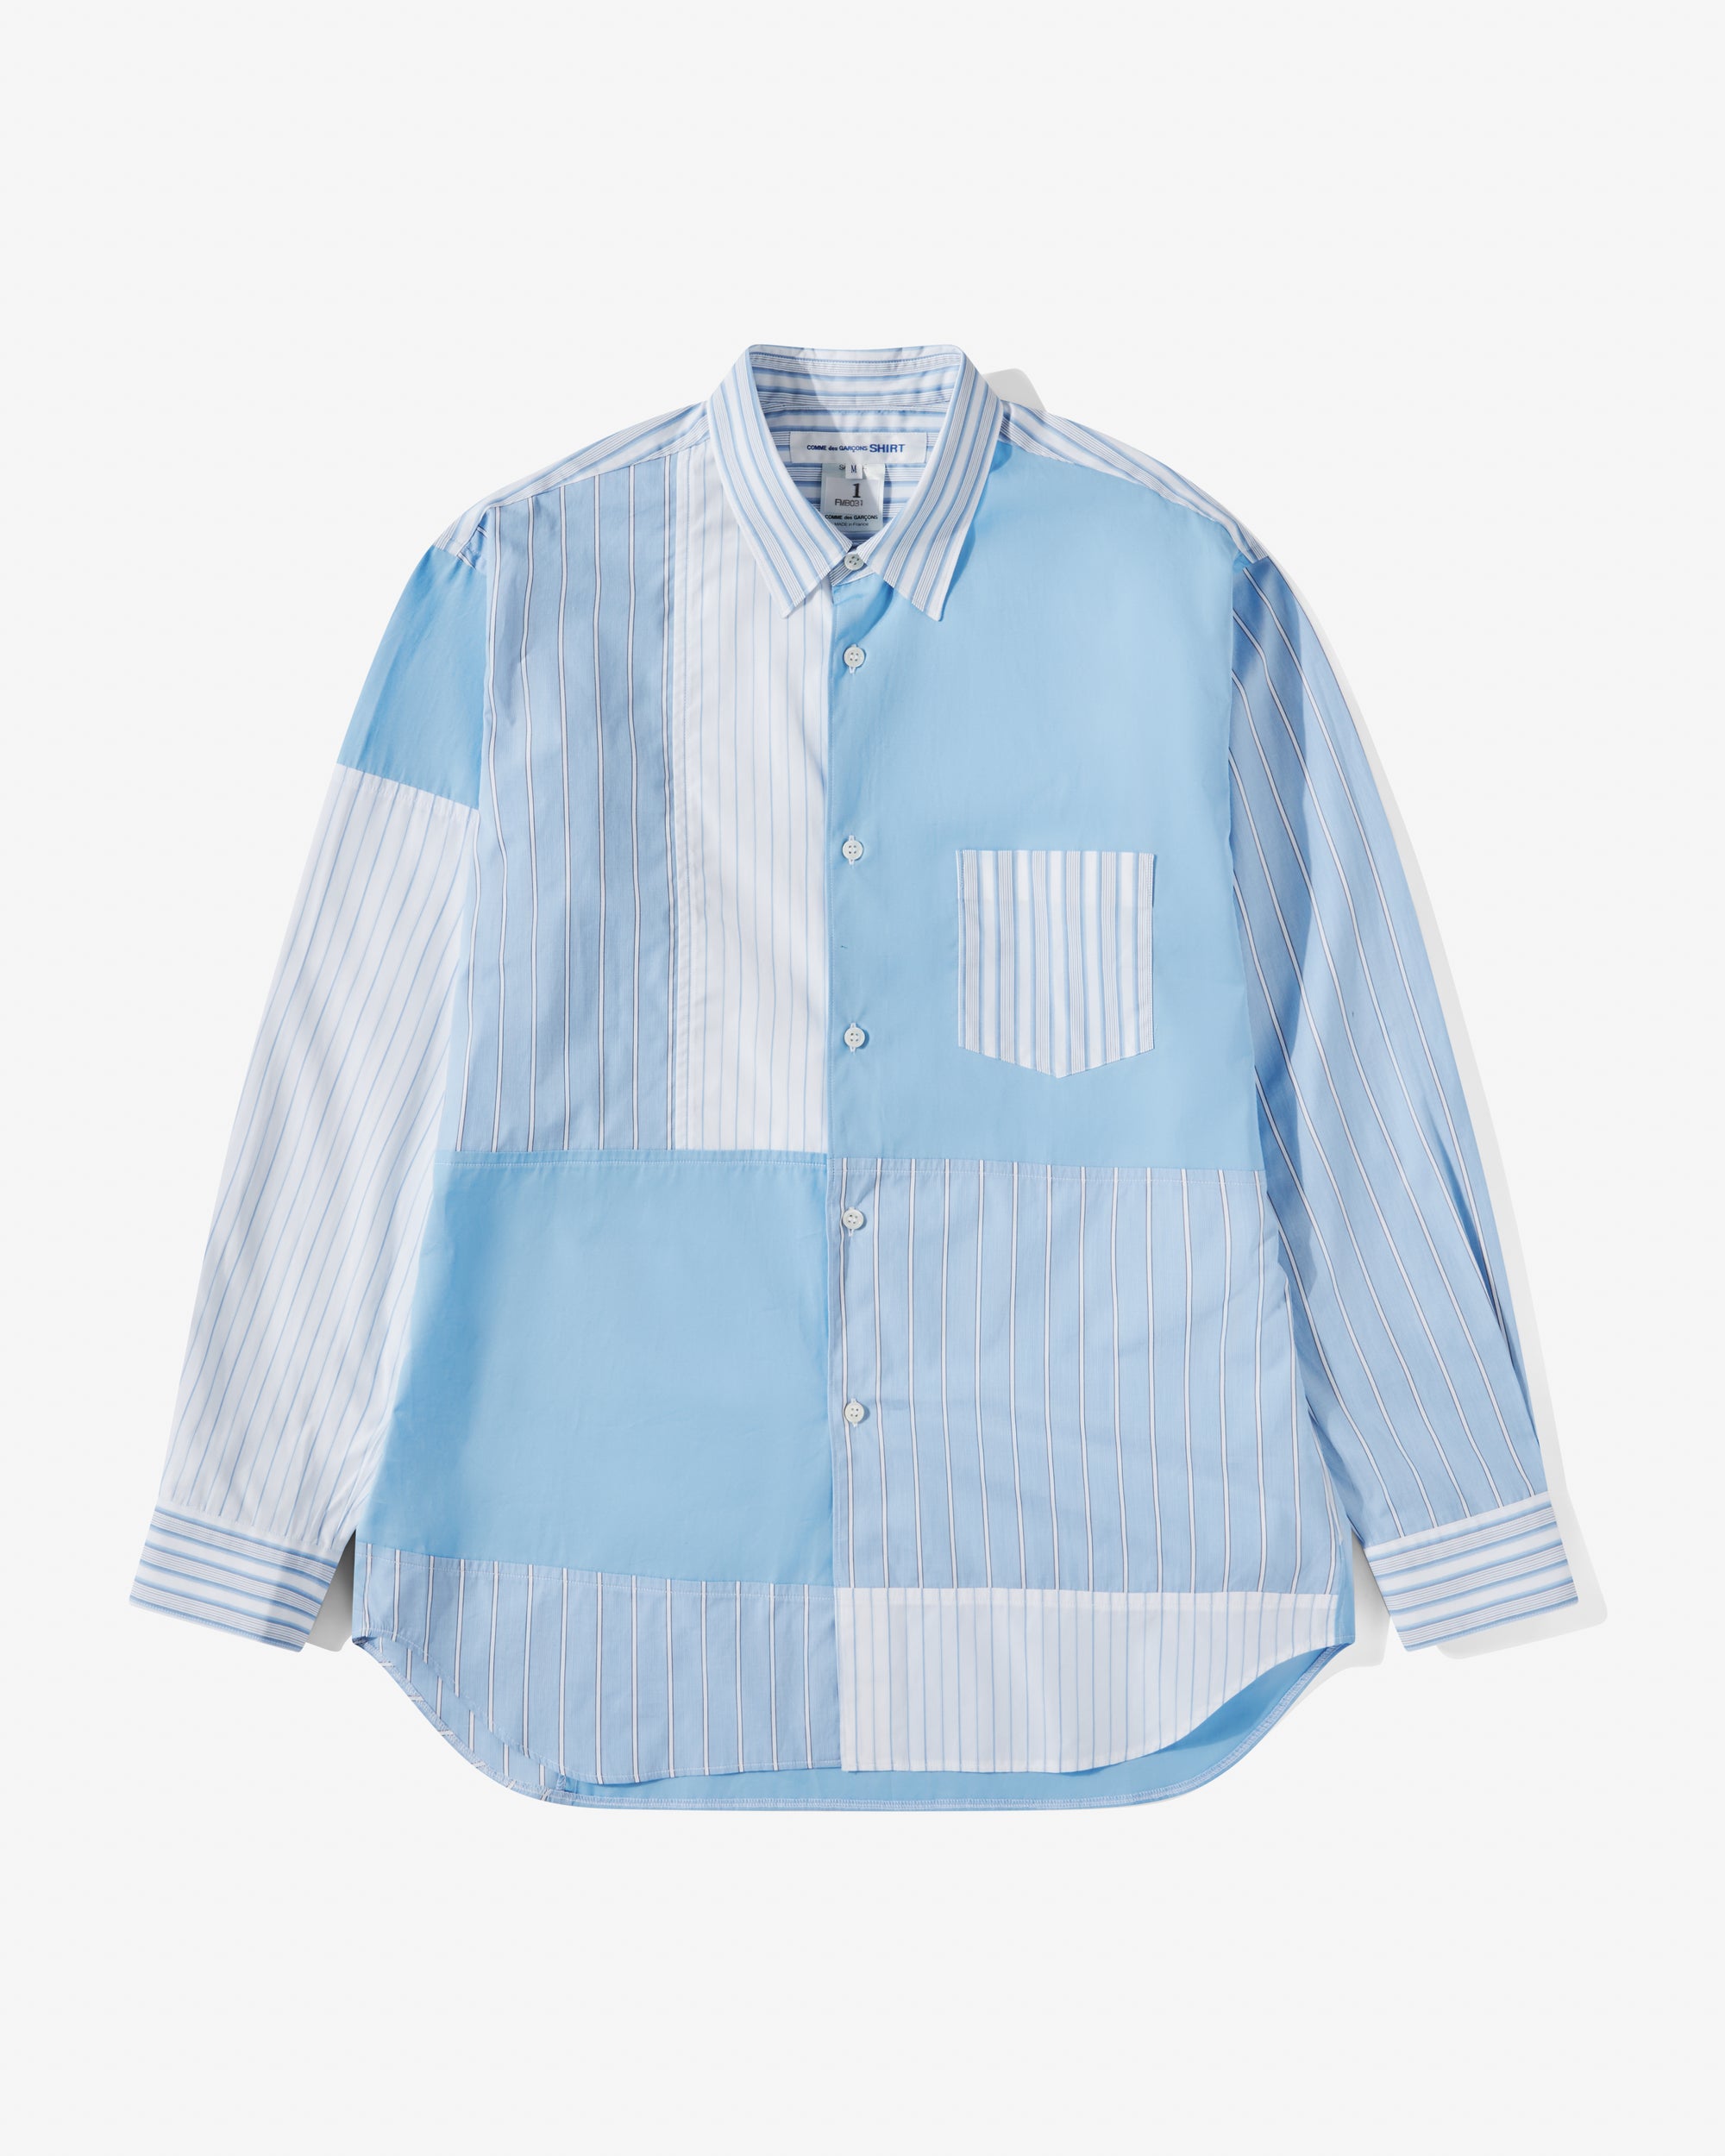 CDG Shirt - Men's Cotton Stripe Poplin Shirt - (Blue) view 1